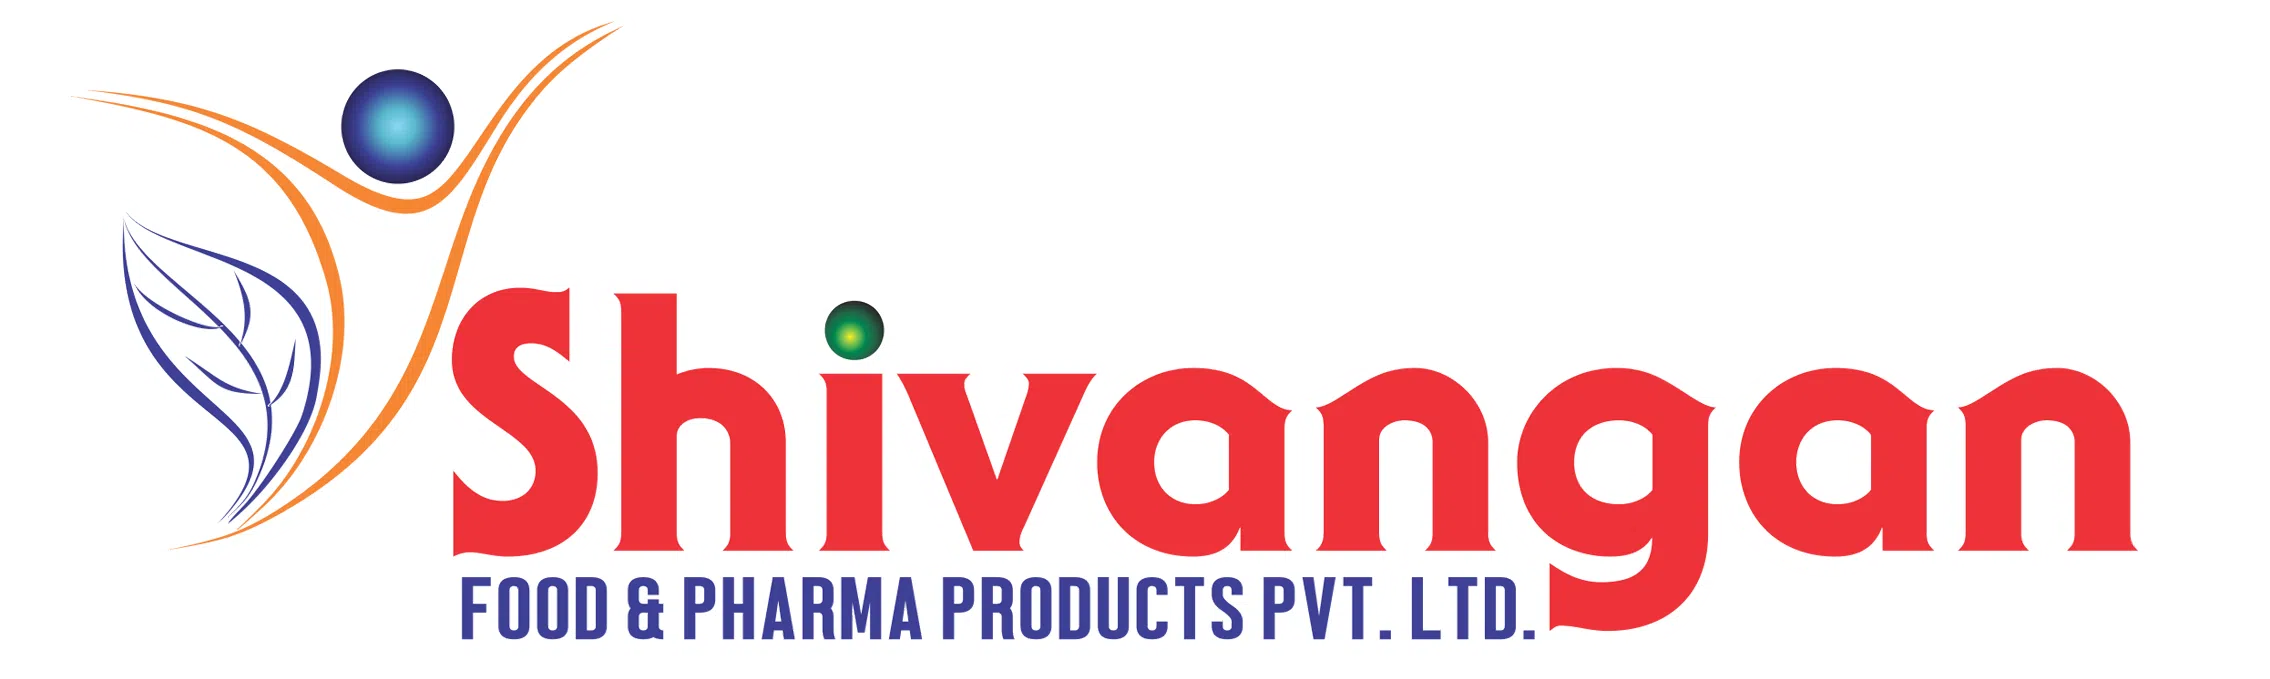 Shivangan Food & Pharma Products Private Limited